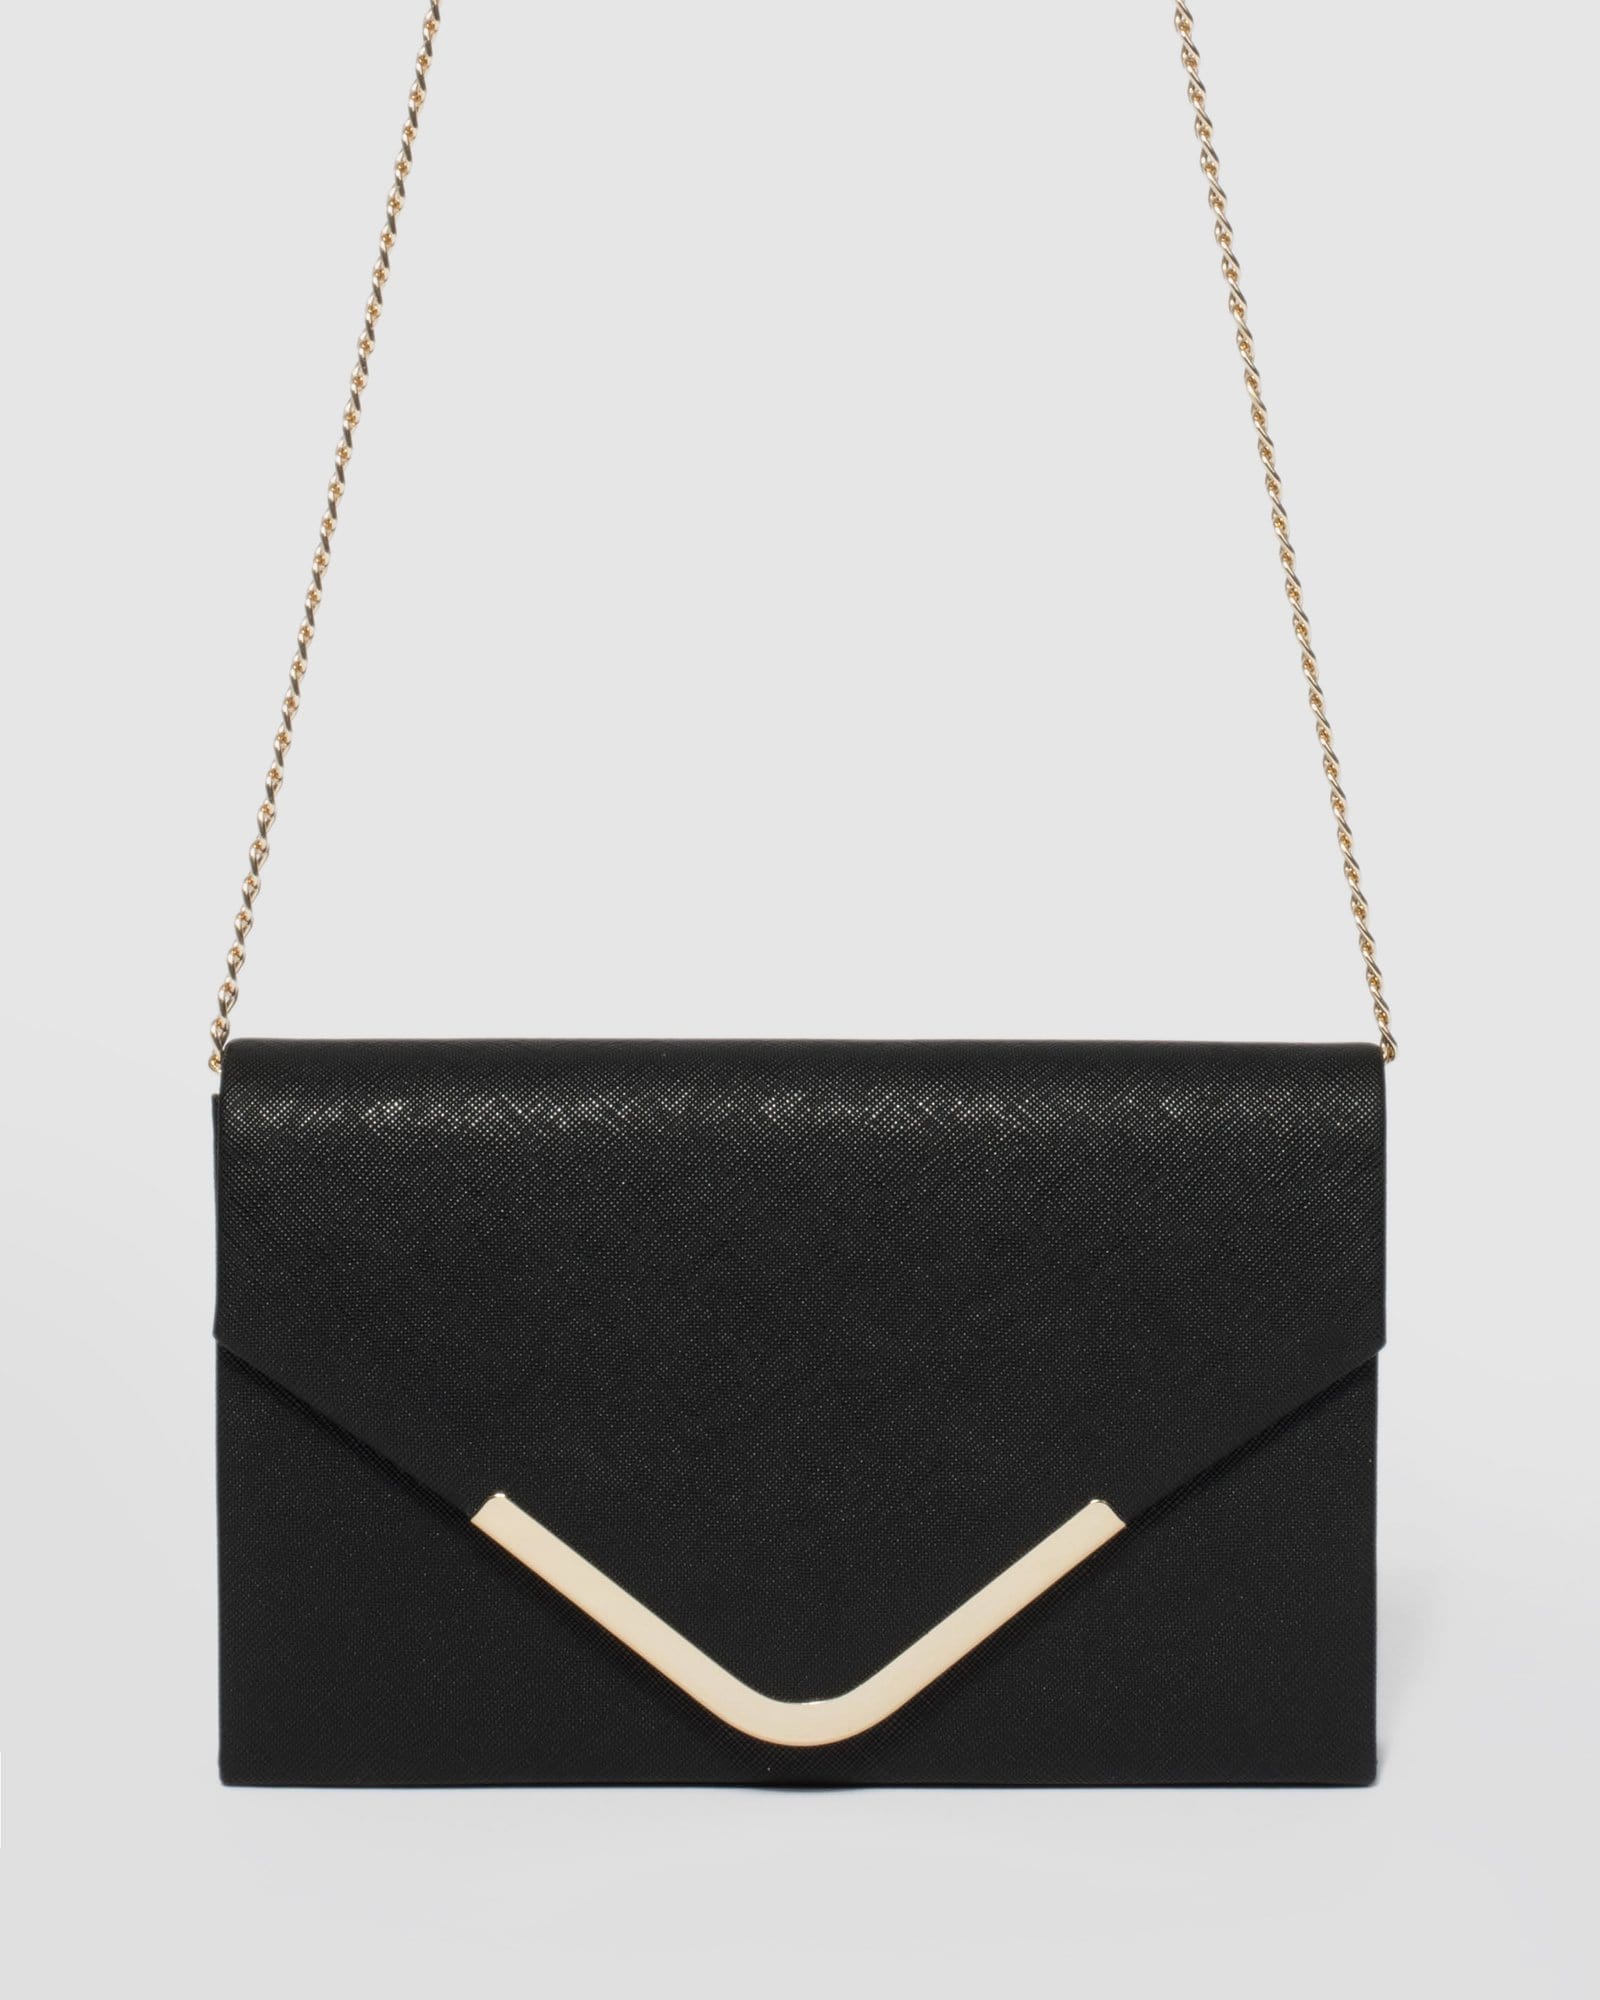 Brand new. Colette Hayman gold cutch purse. | Purses crossbody, Purses,  Gold clutch purse